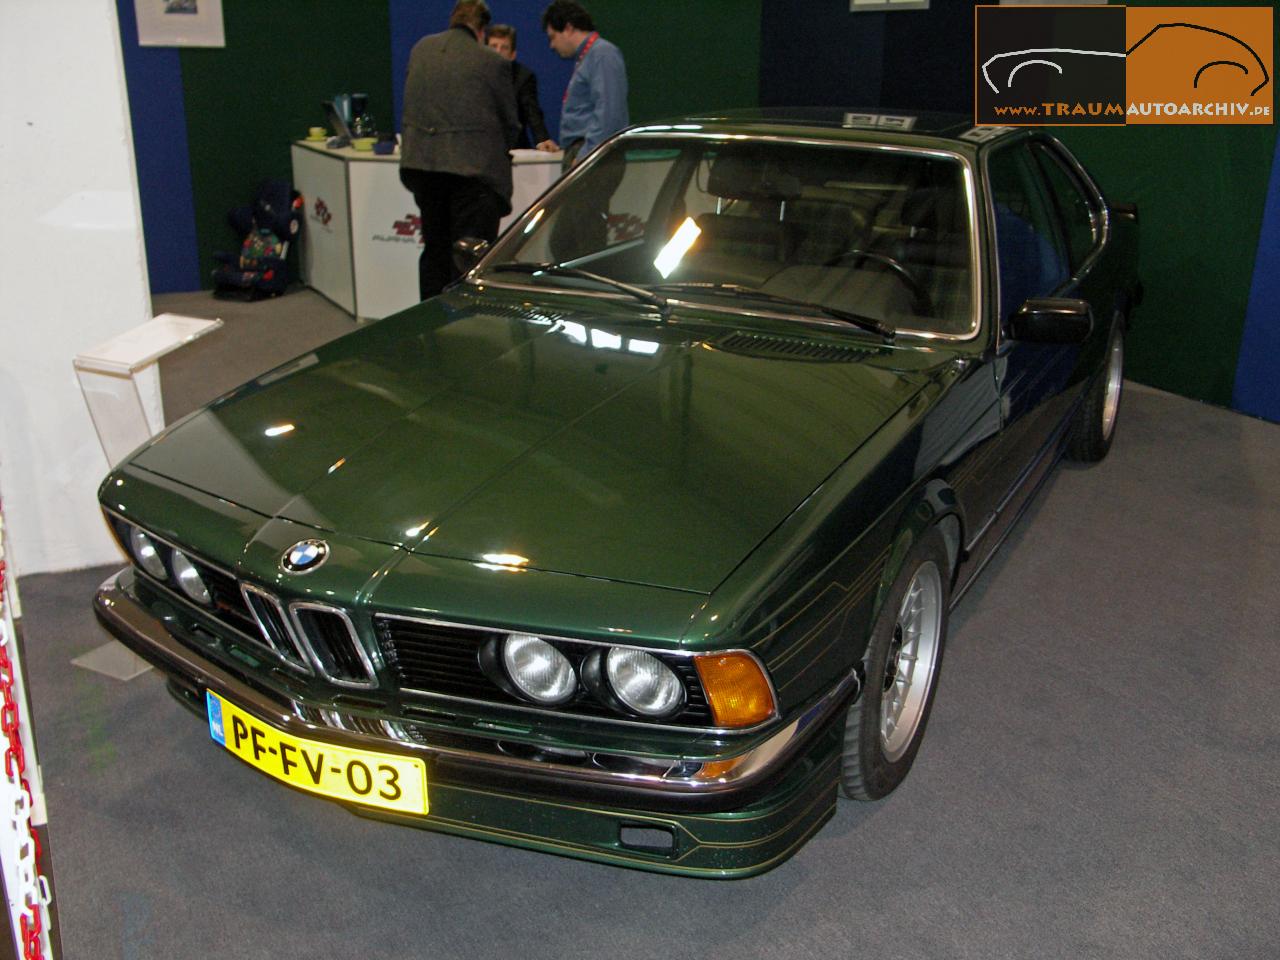 Alpina-BMW B7 S Turbo Coupe.jpg 2668.9K